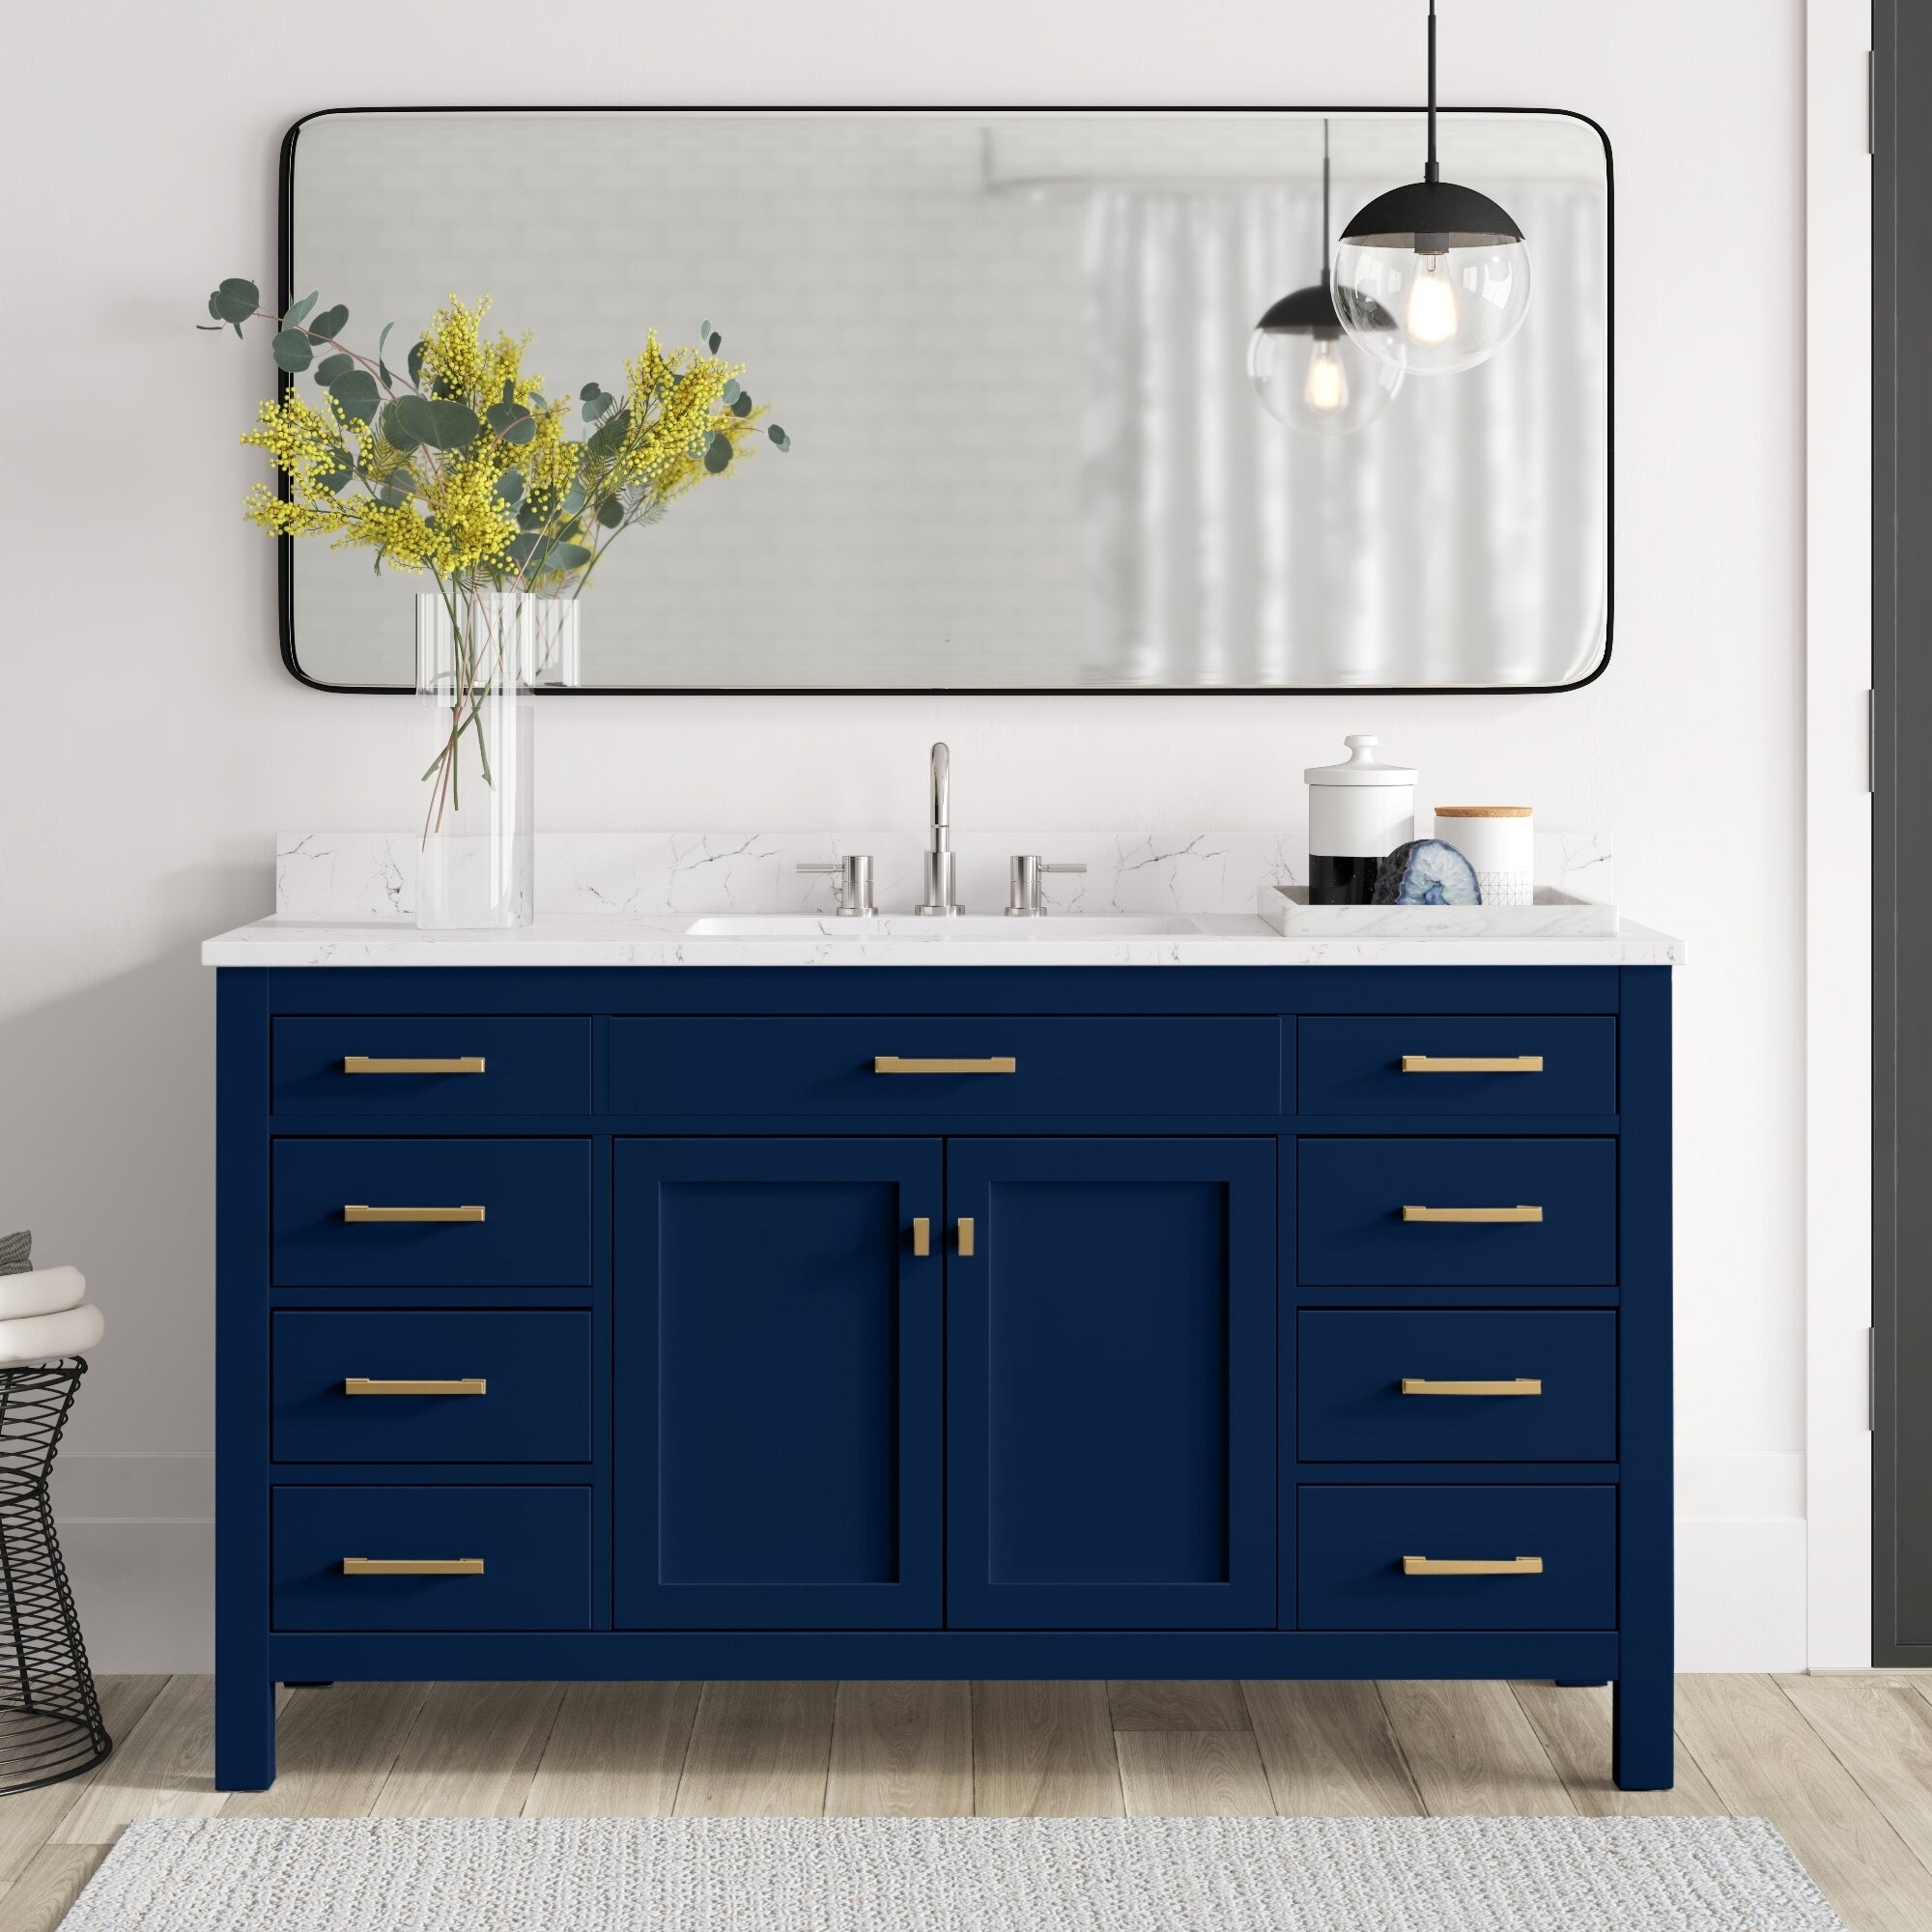 Blue bathroom vanity with gold handles